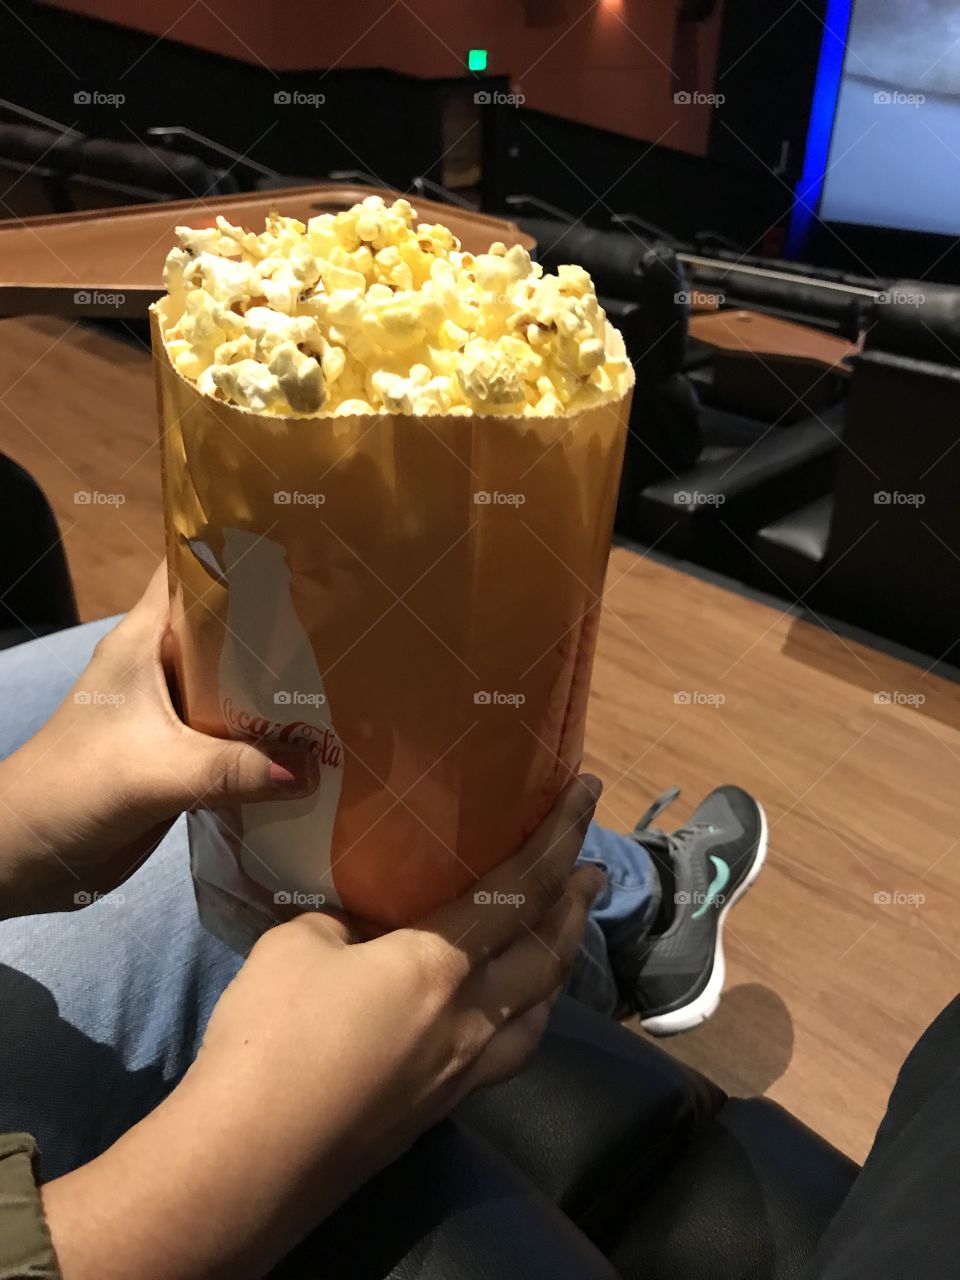 Popcorn and movie. Perfecto!